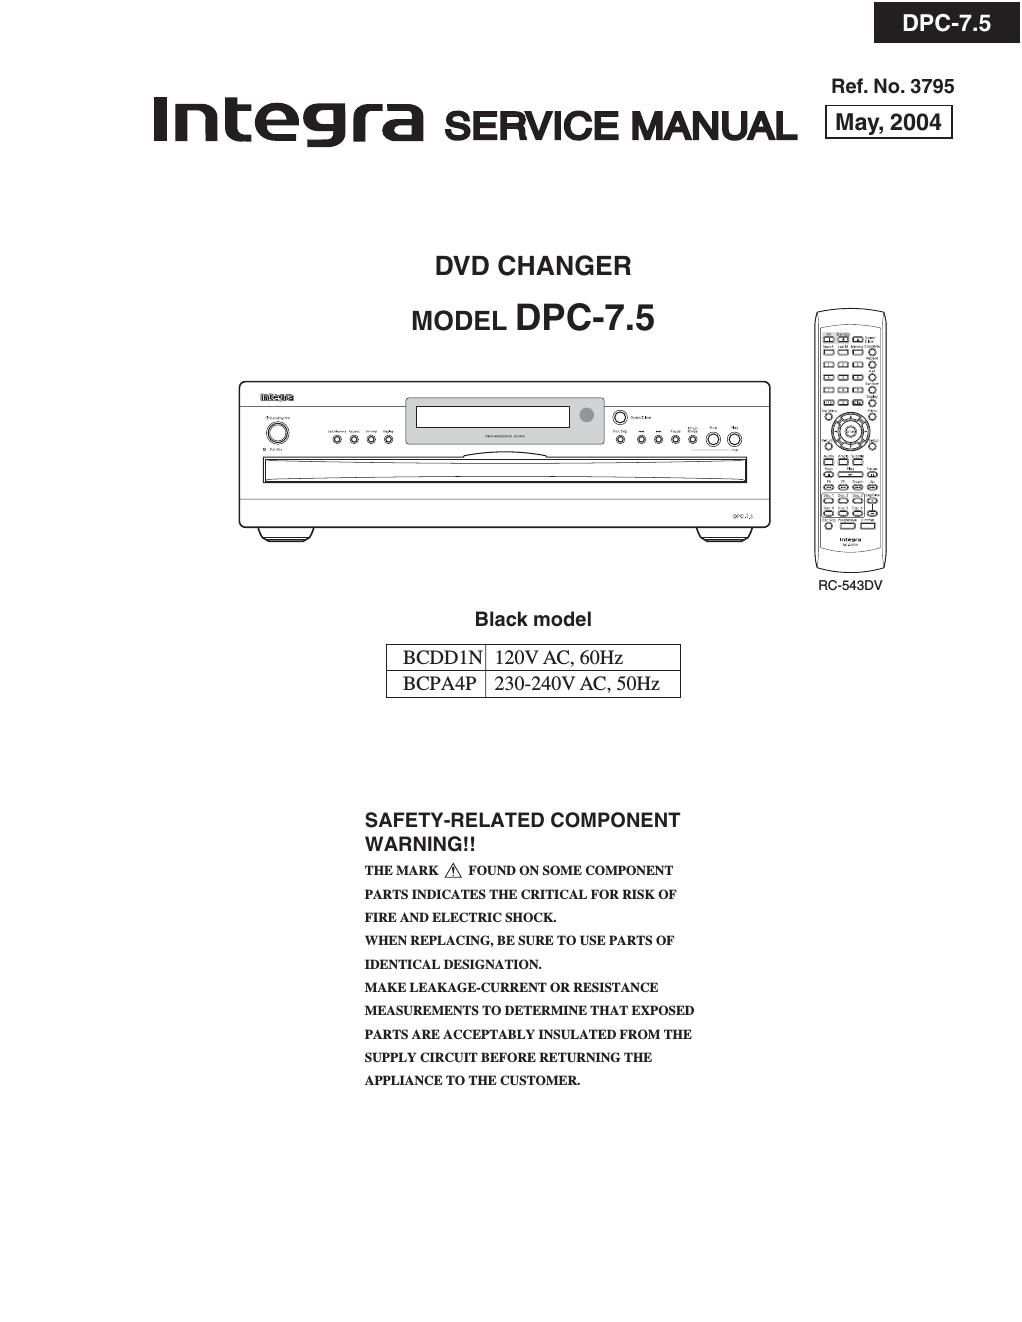 integra dpc 7 5 service manual